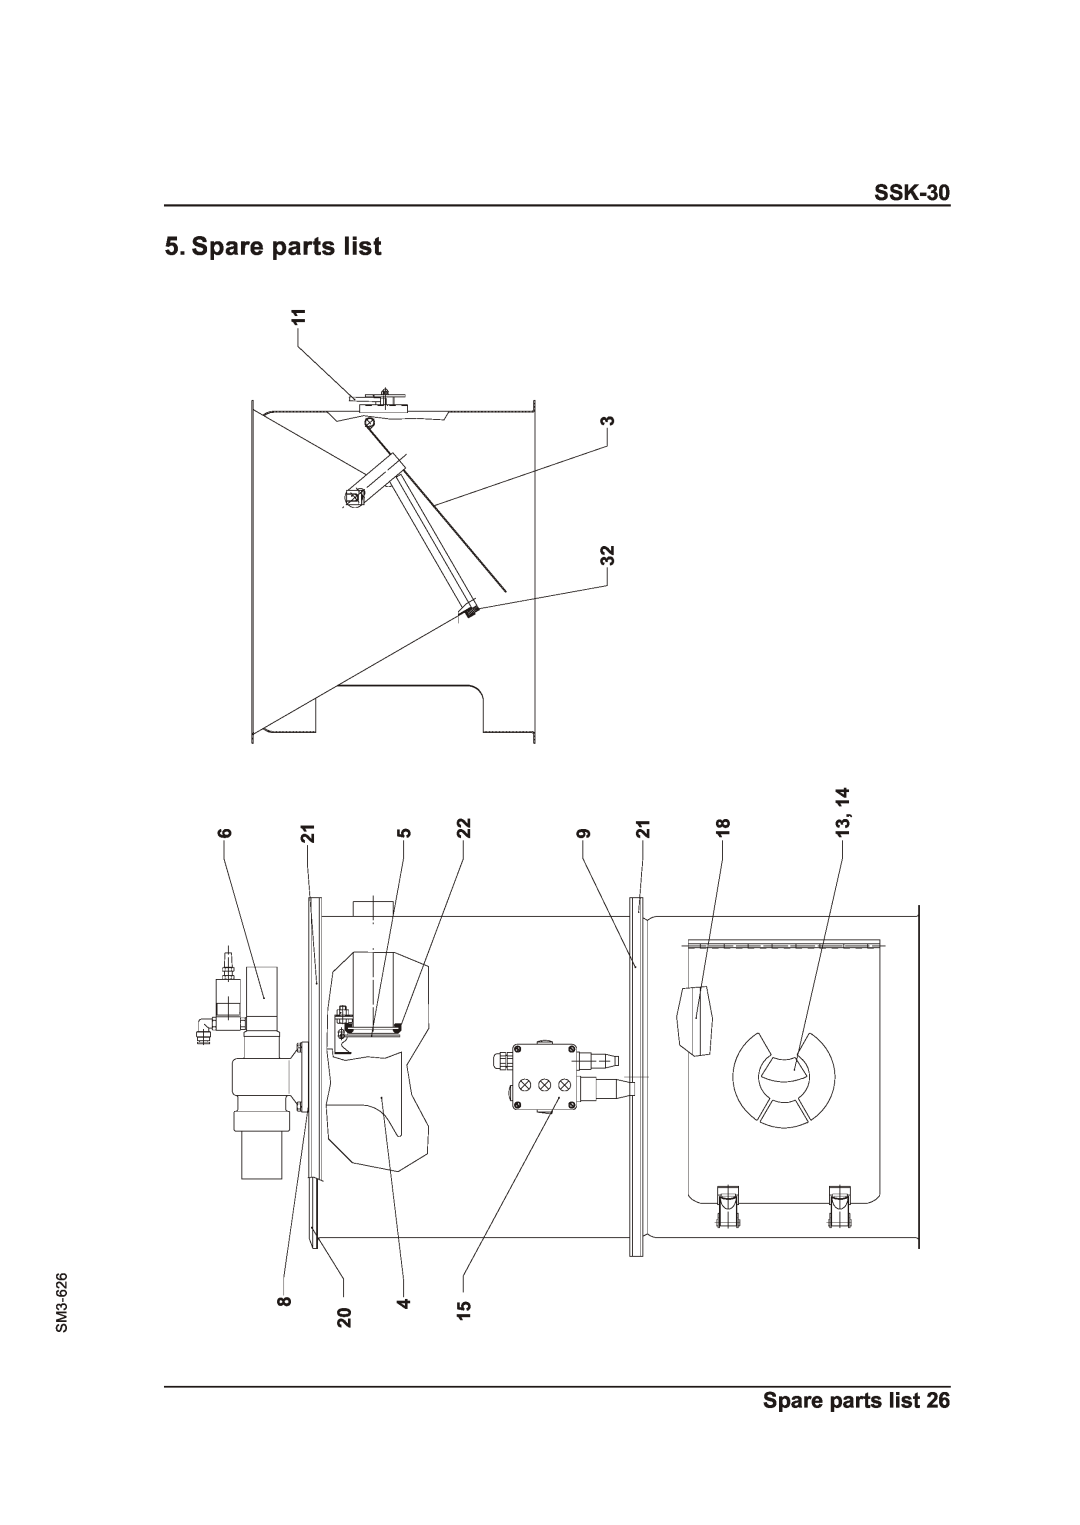 Sterling SSK-30 manual Spare parts list, SM3-626 